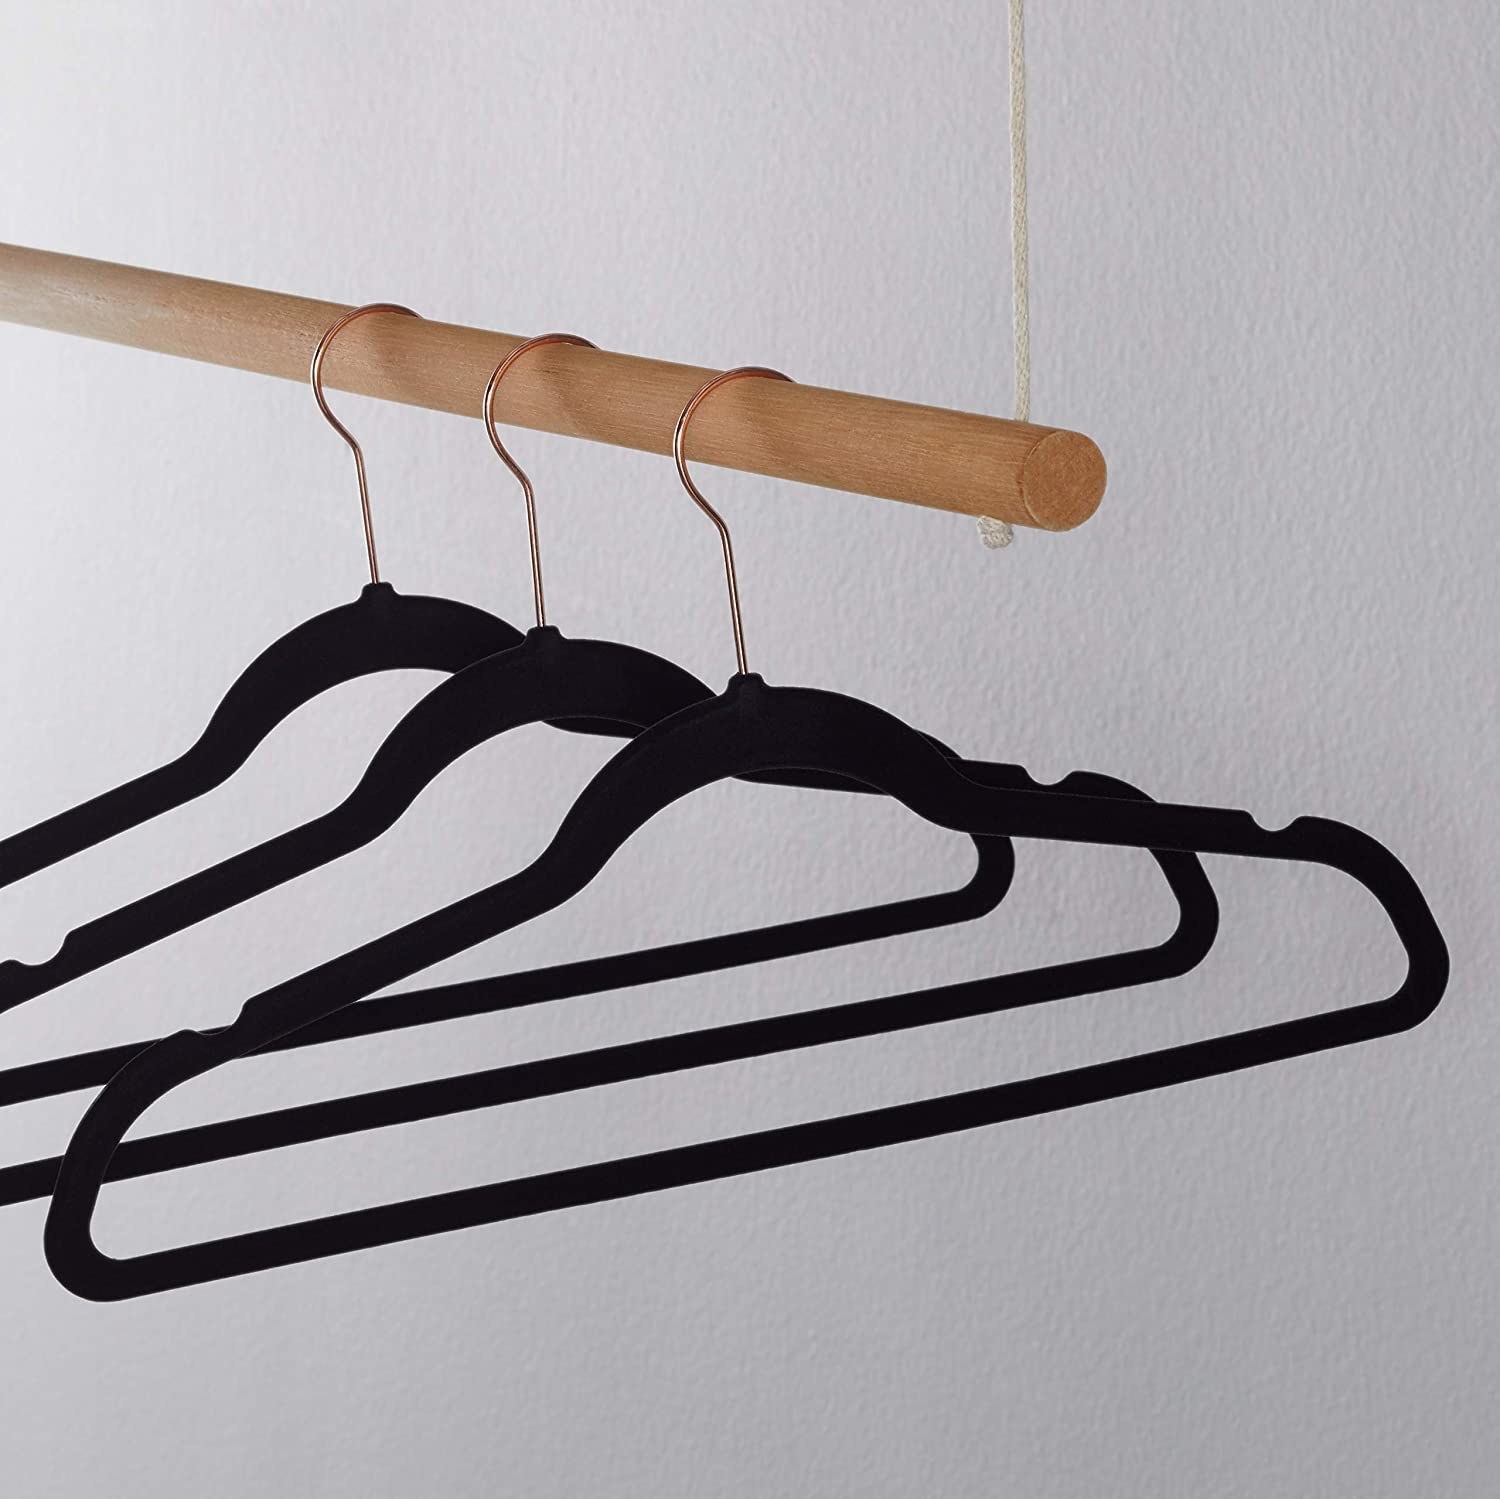 Three velvet hangers on a clothing rod